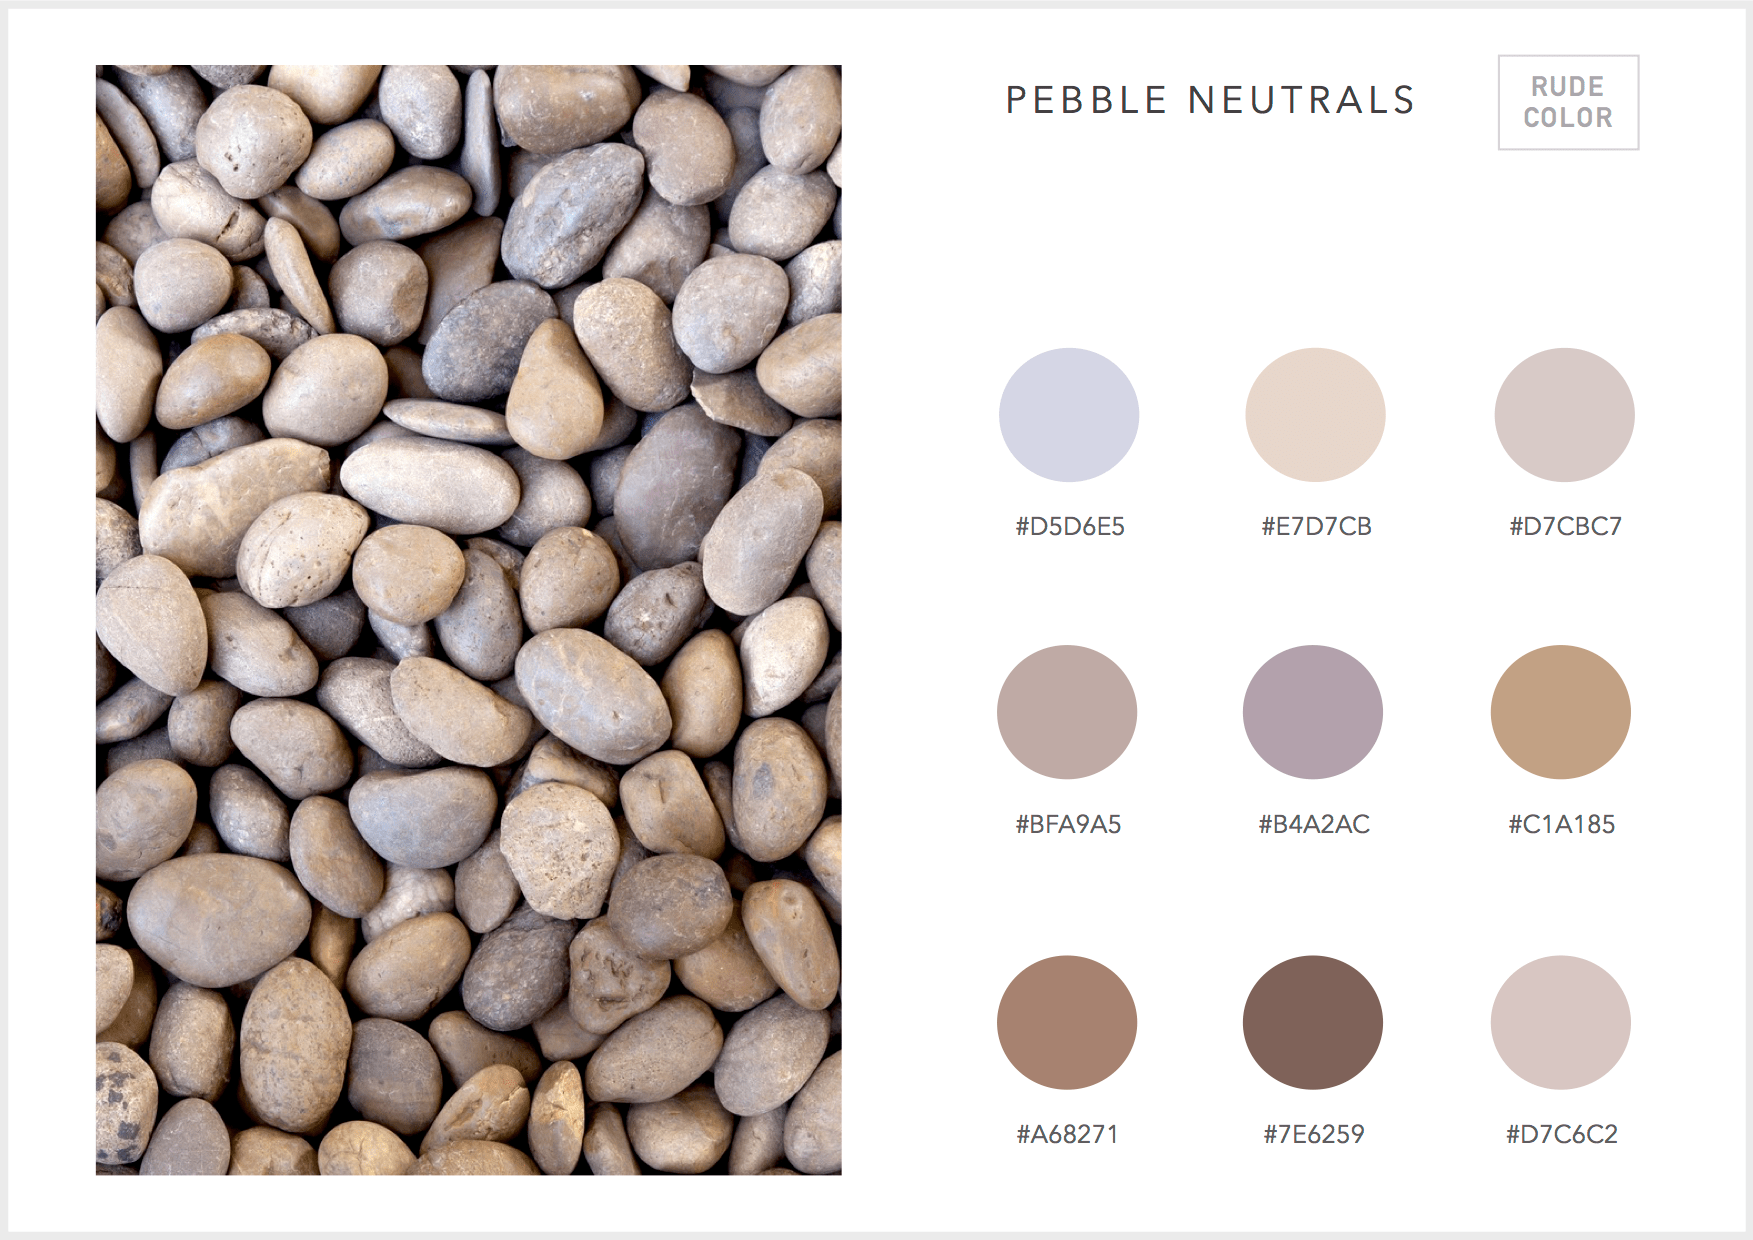 Stone & Pebble Color Charts - RUDECOLOR. 